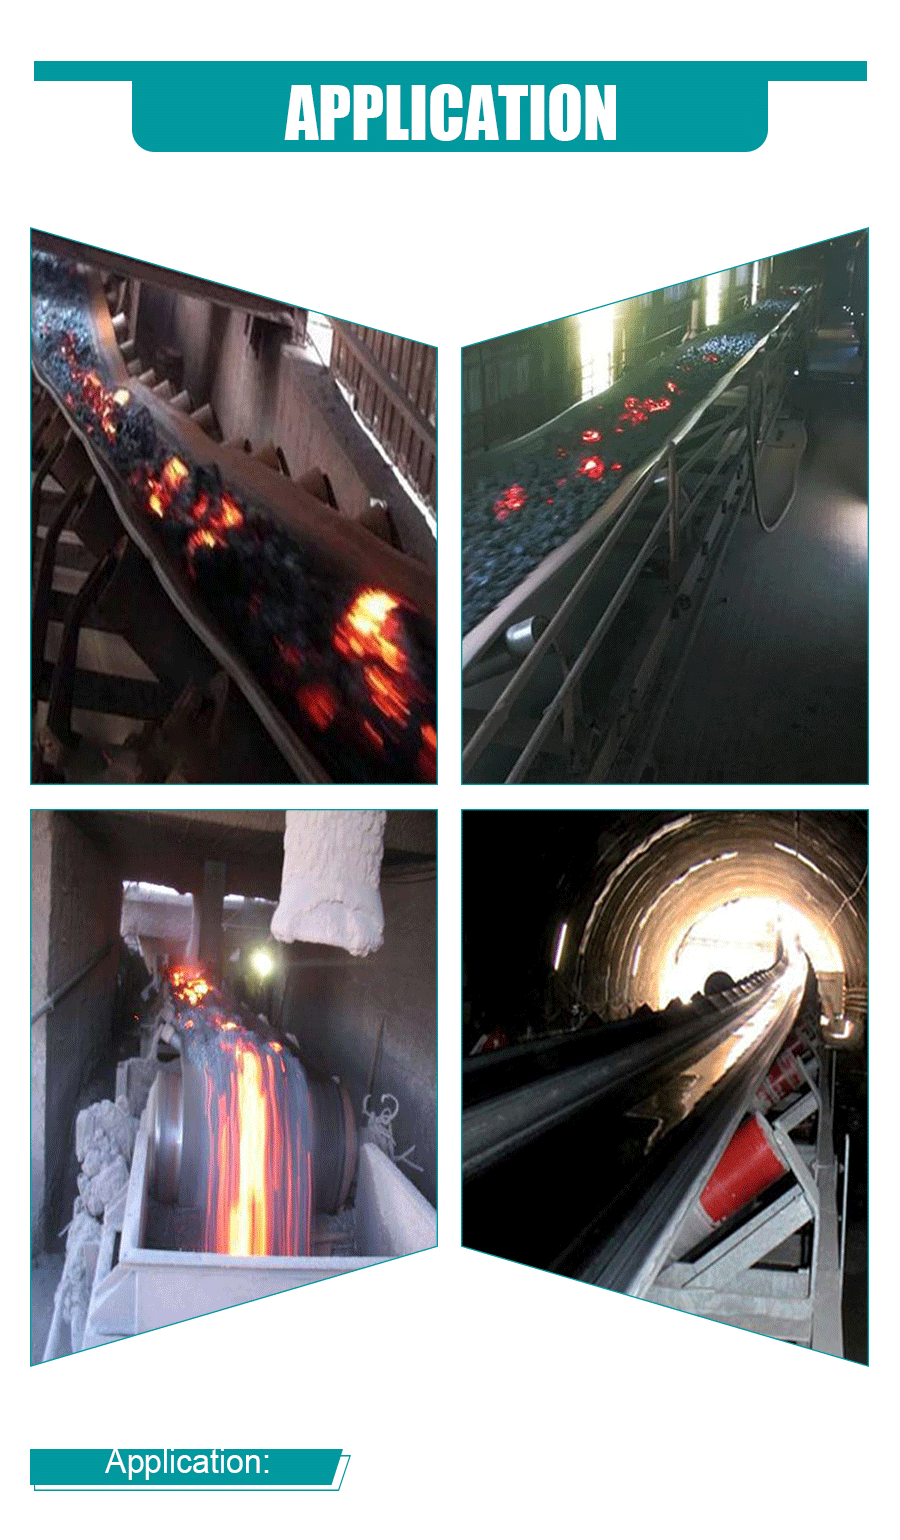 Heat Resistant Rubber Conveyor Belt For Coke